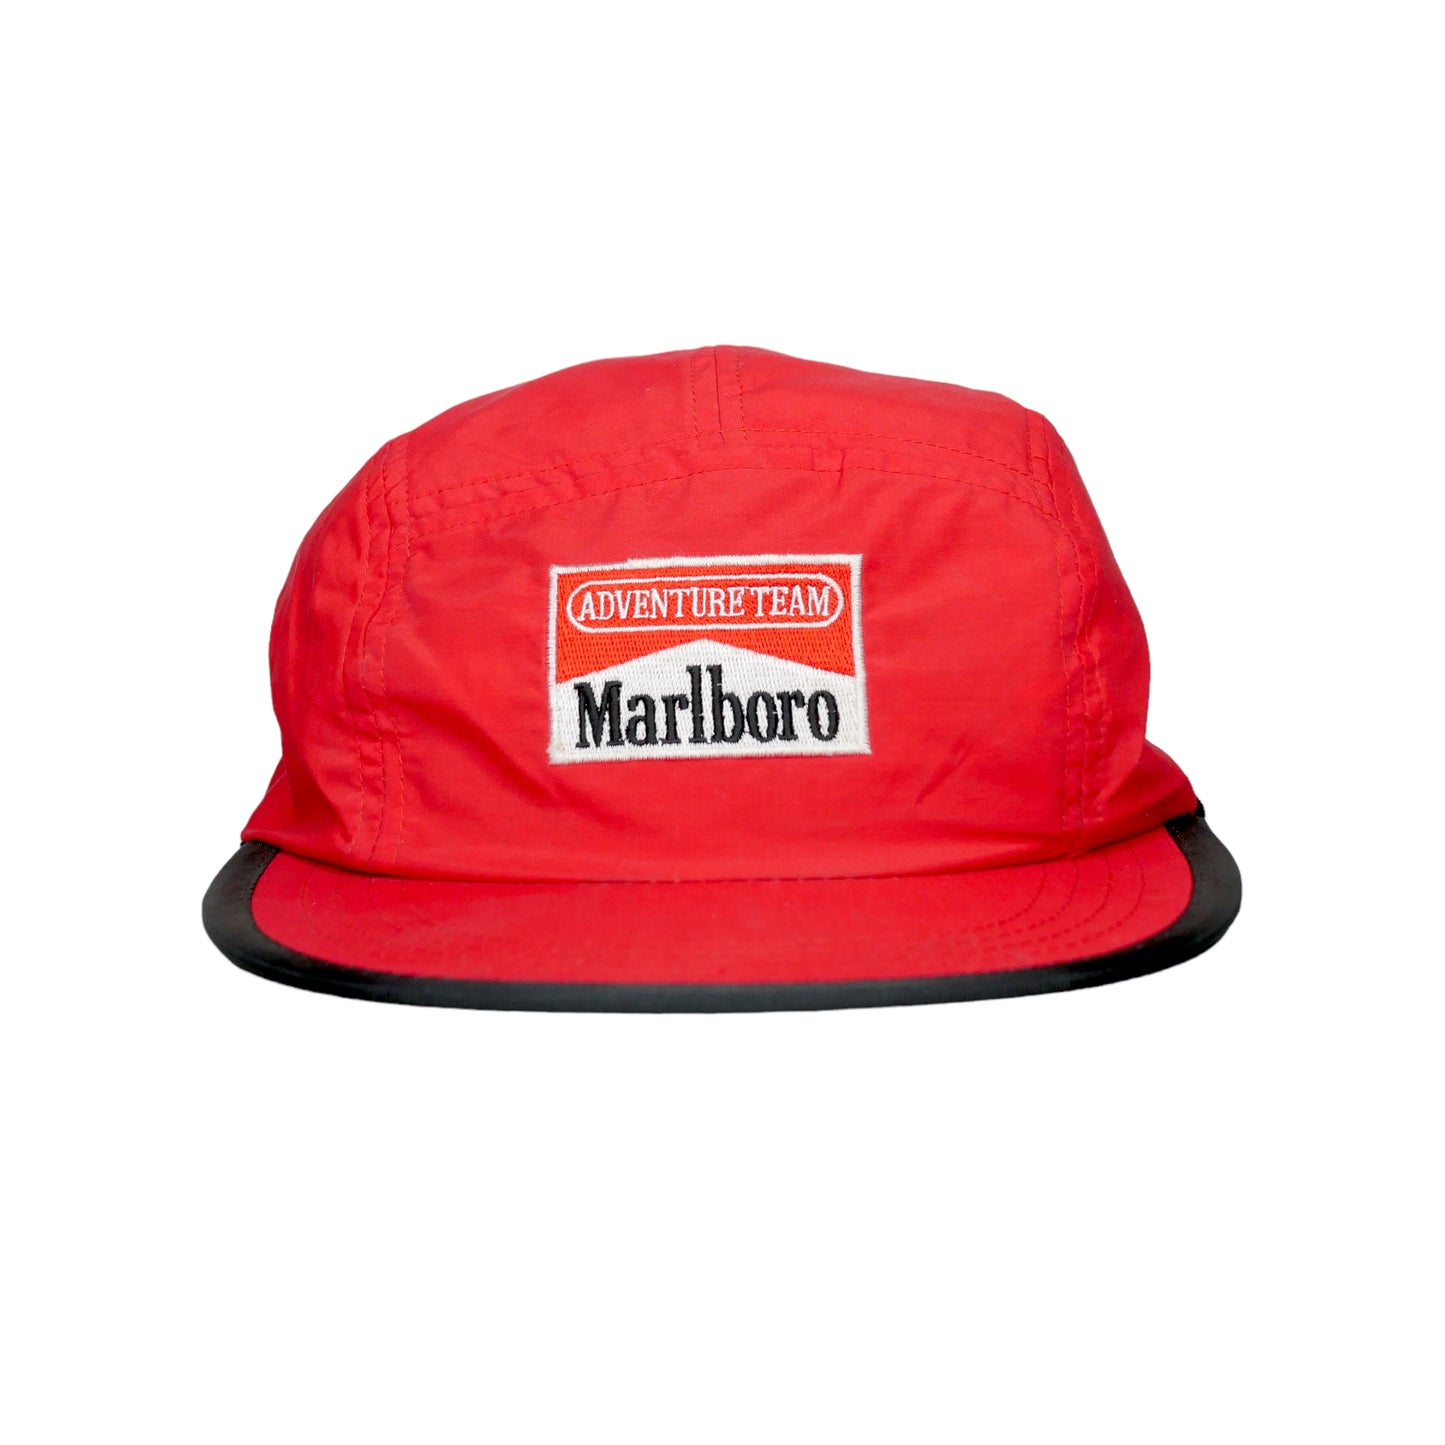 Marlboro 5 Panel Strapback Hat